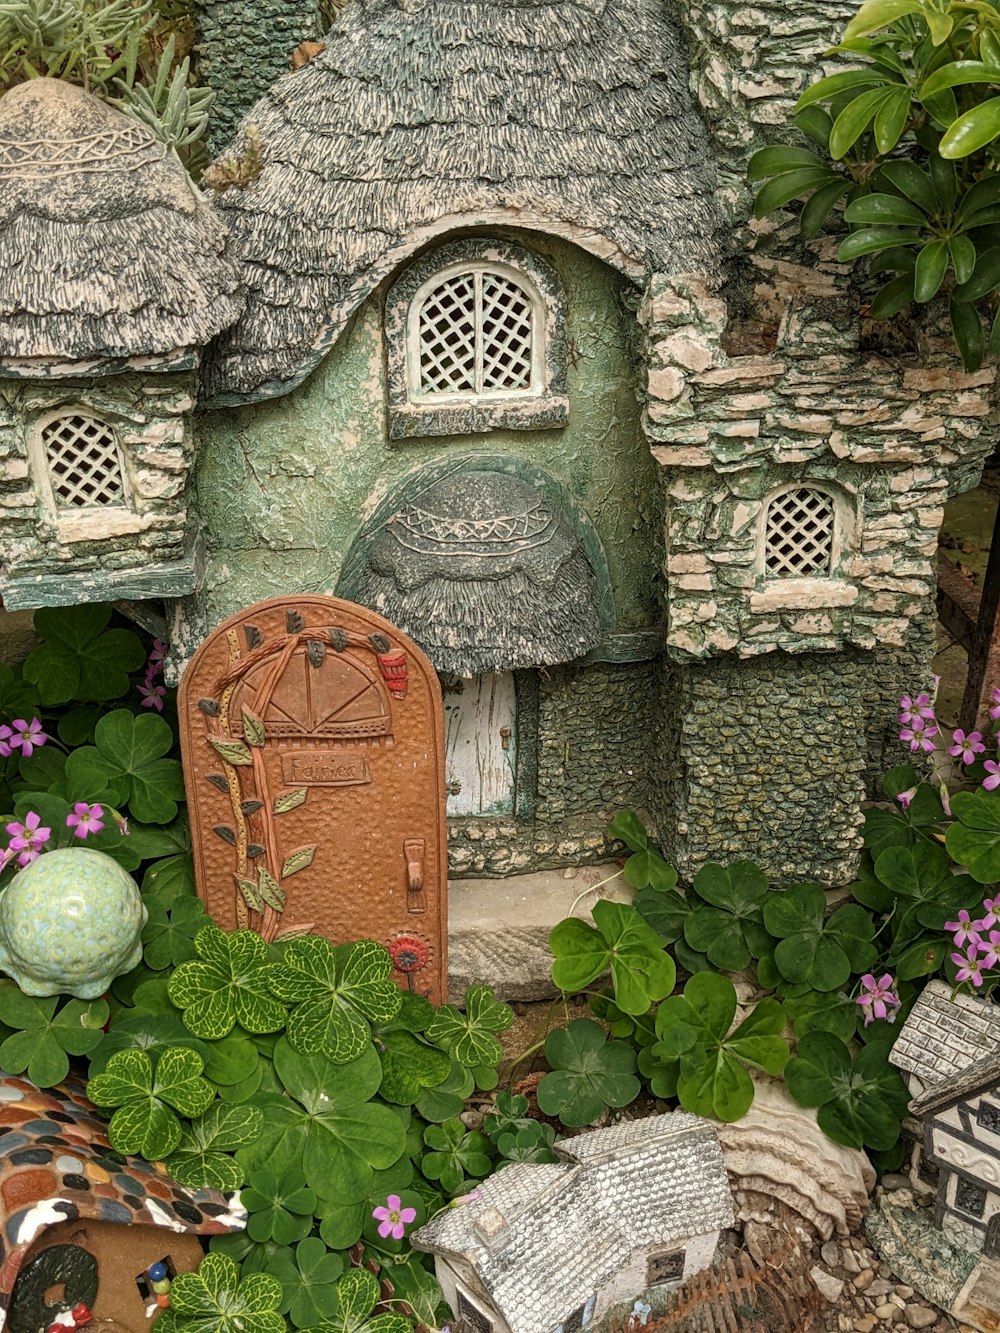 a fairy garden with a fairy house and garden items